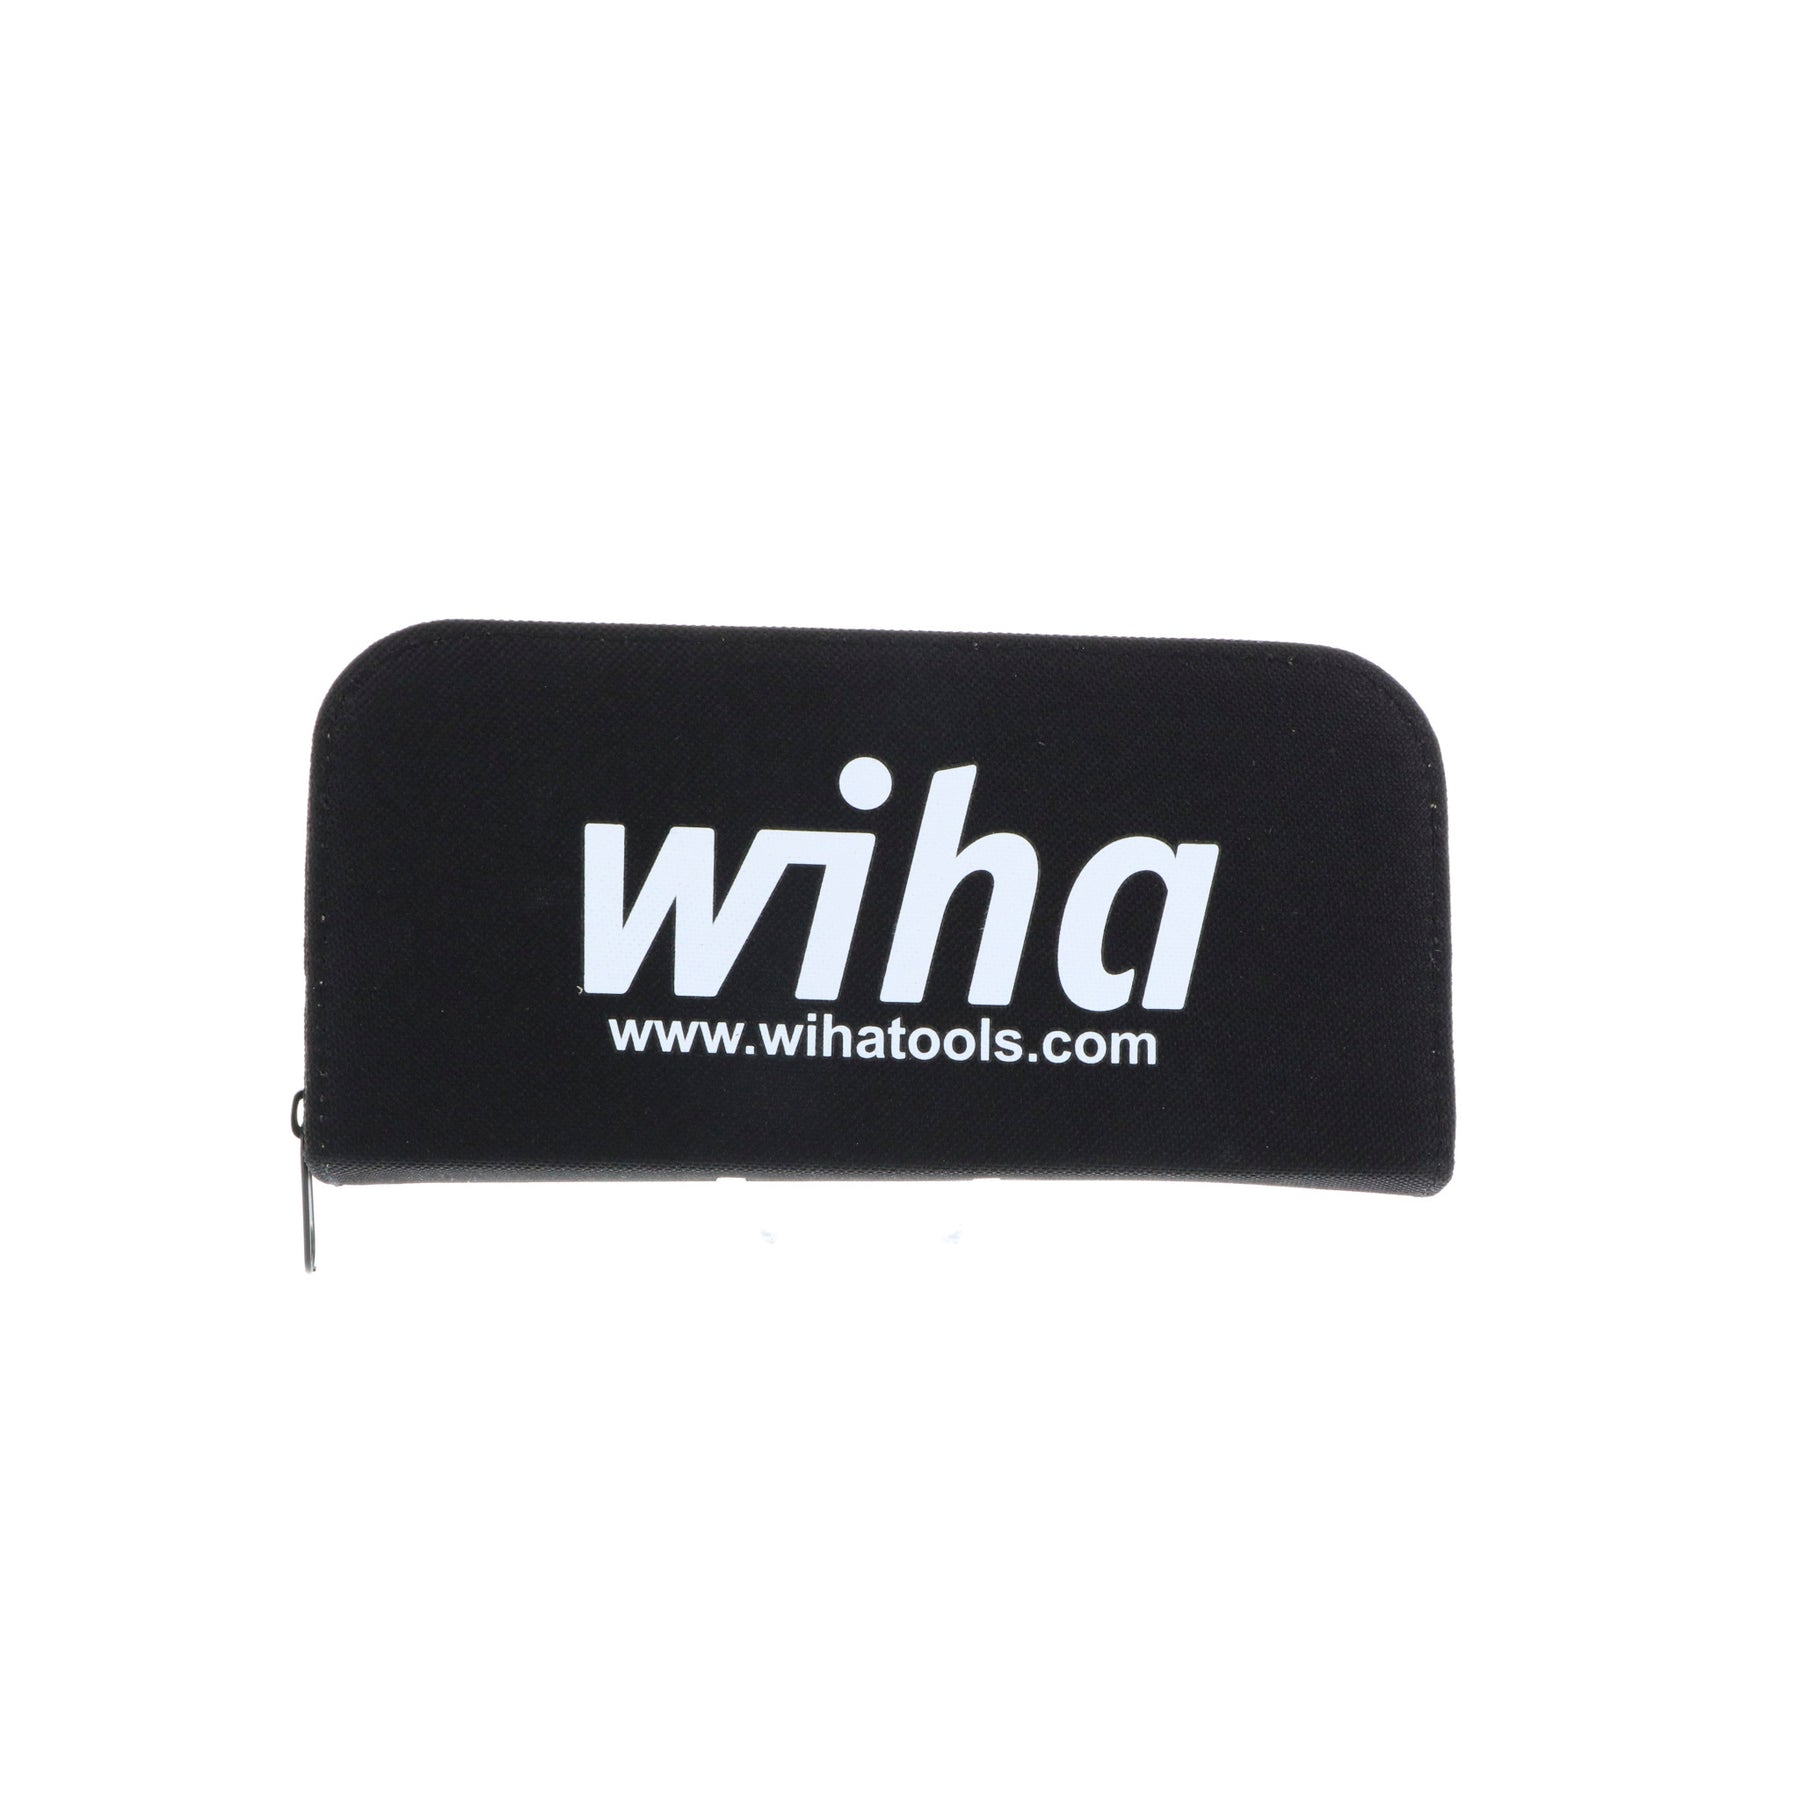 Wiha 91204 Replacement Zipper Case for Micro bits